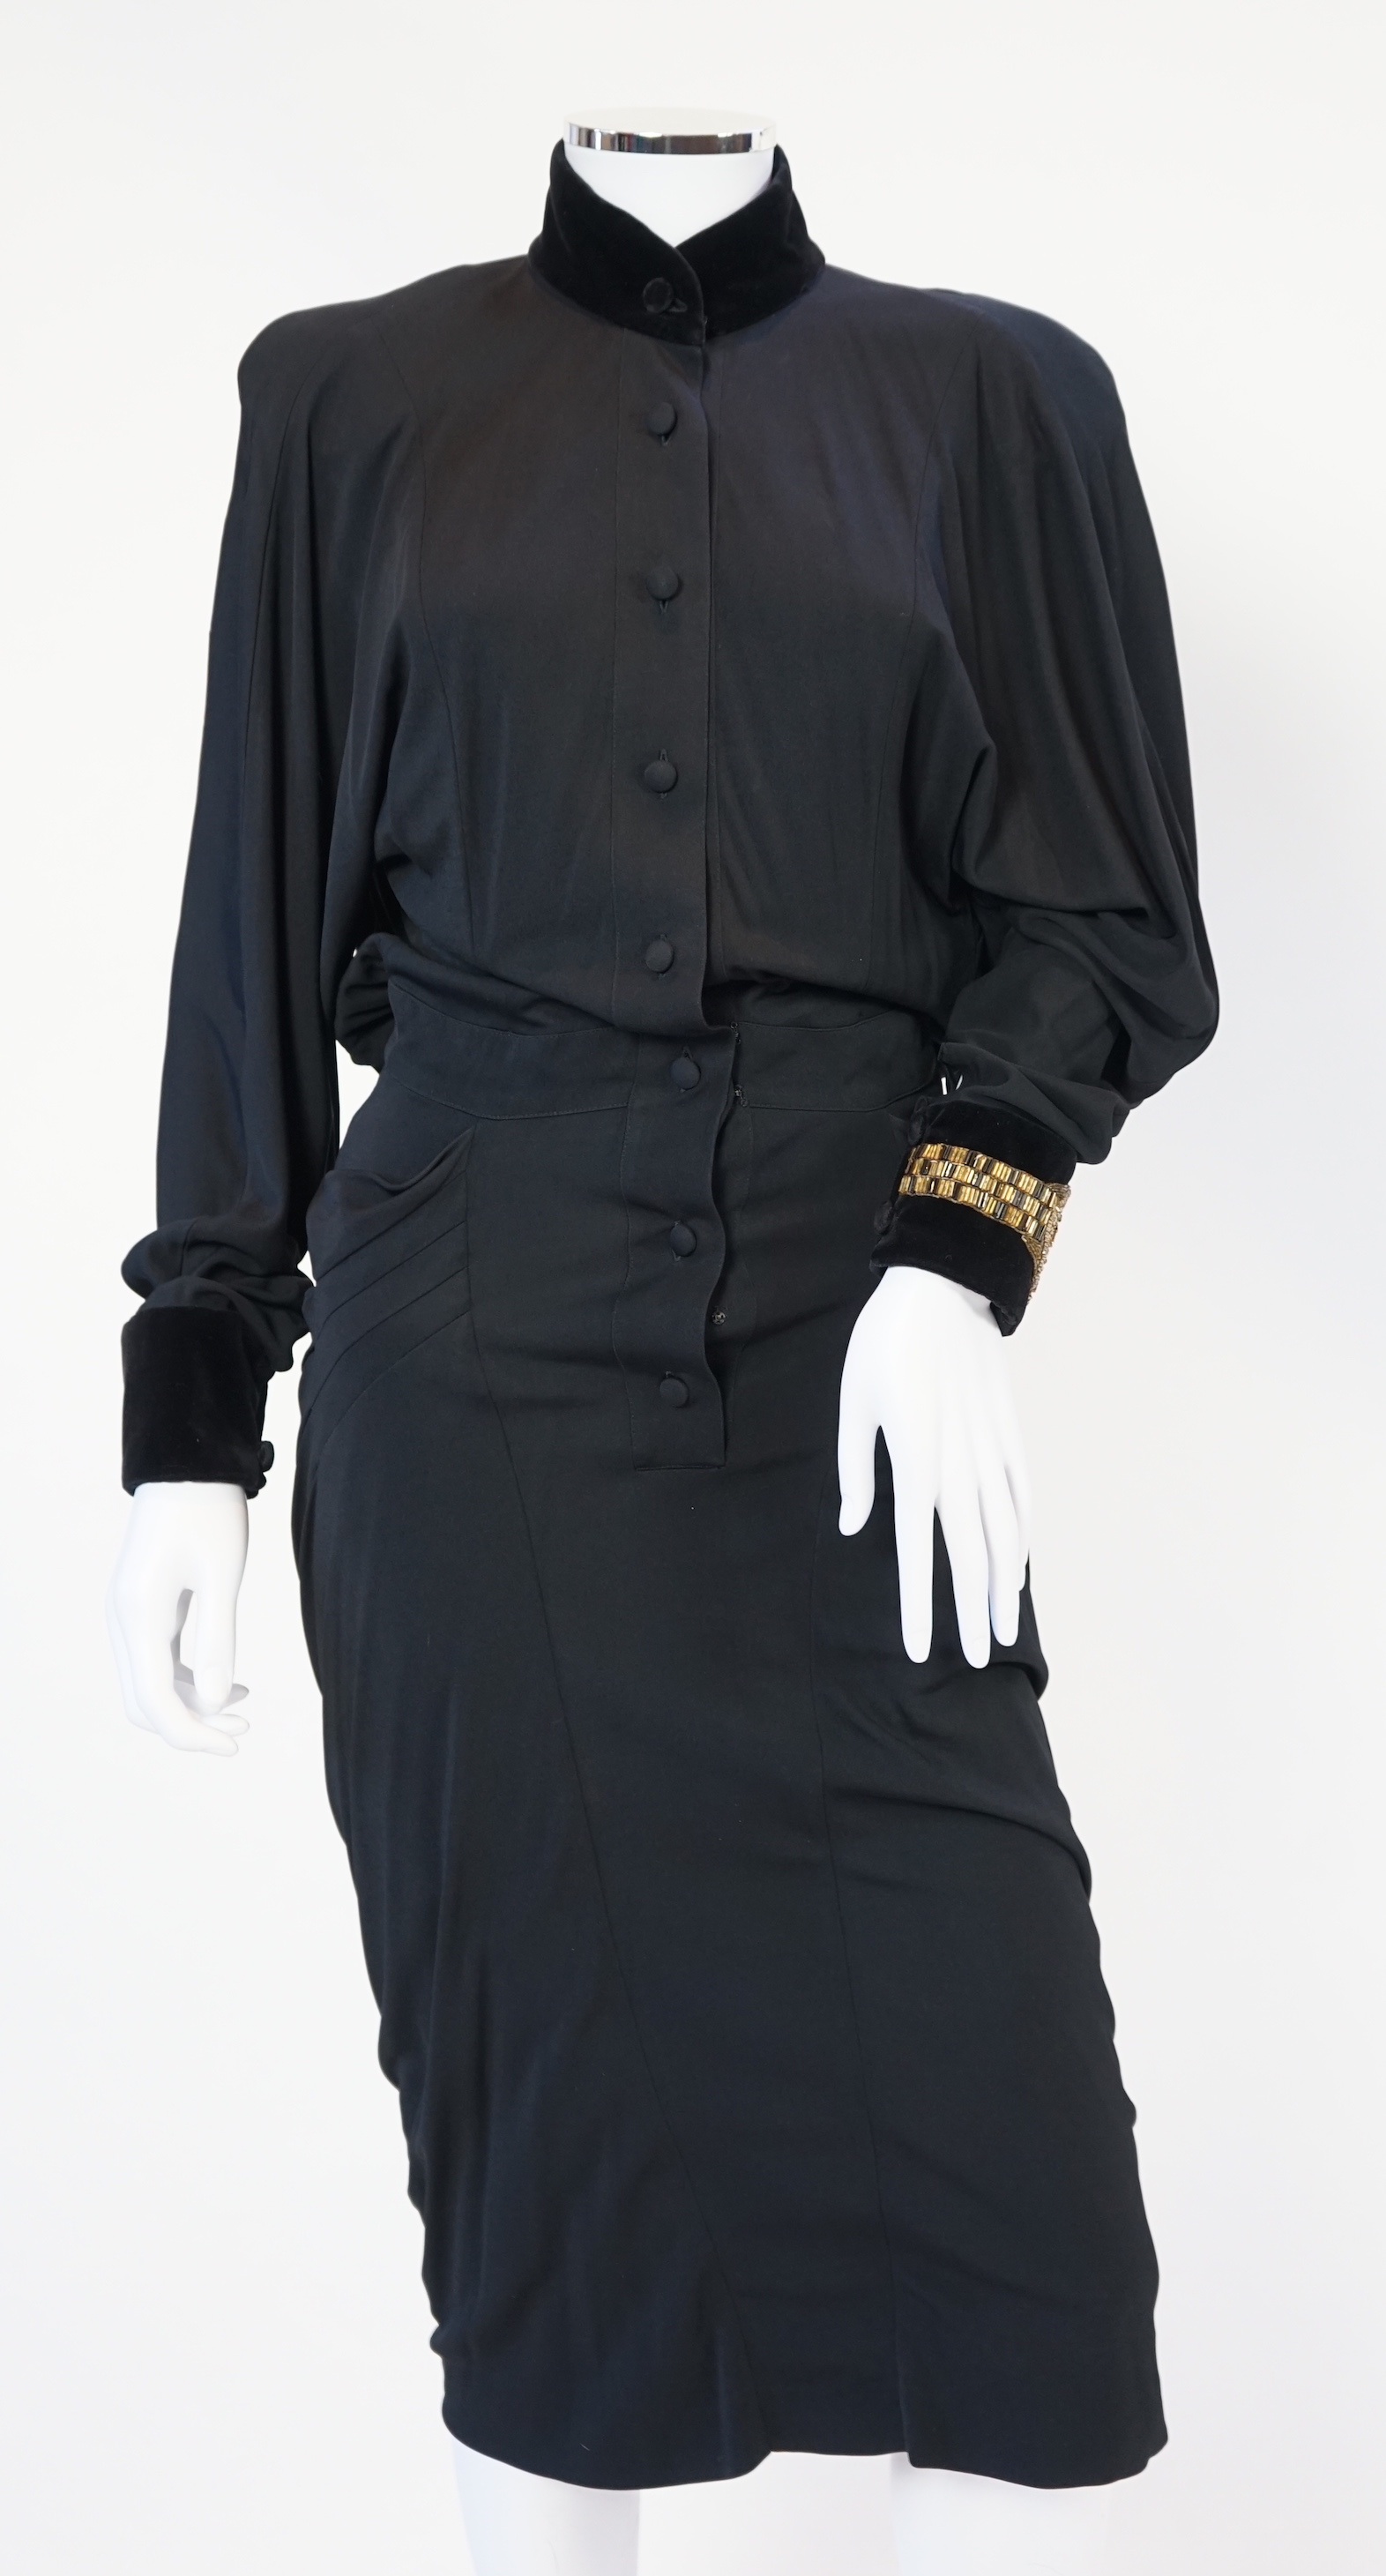 A Karl Lagerfeld black evening dress, stunning dress, velvet collar and velvet cuffs with gold - Image 2 of 11